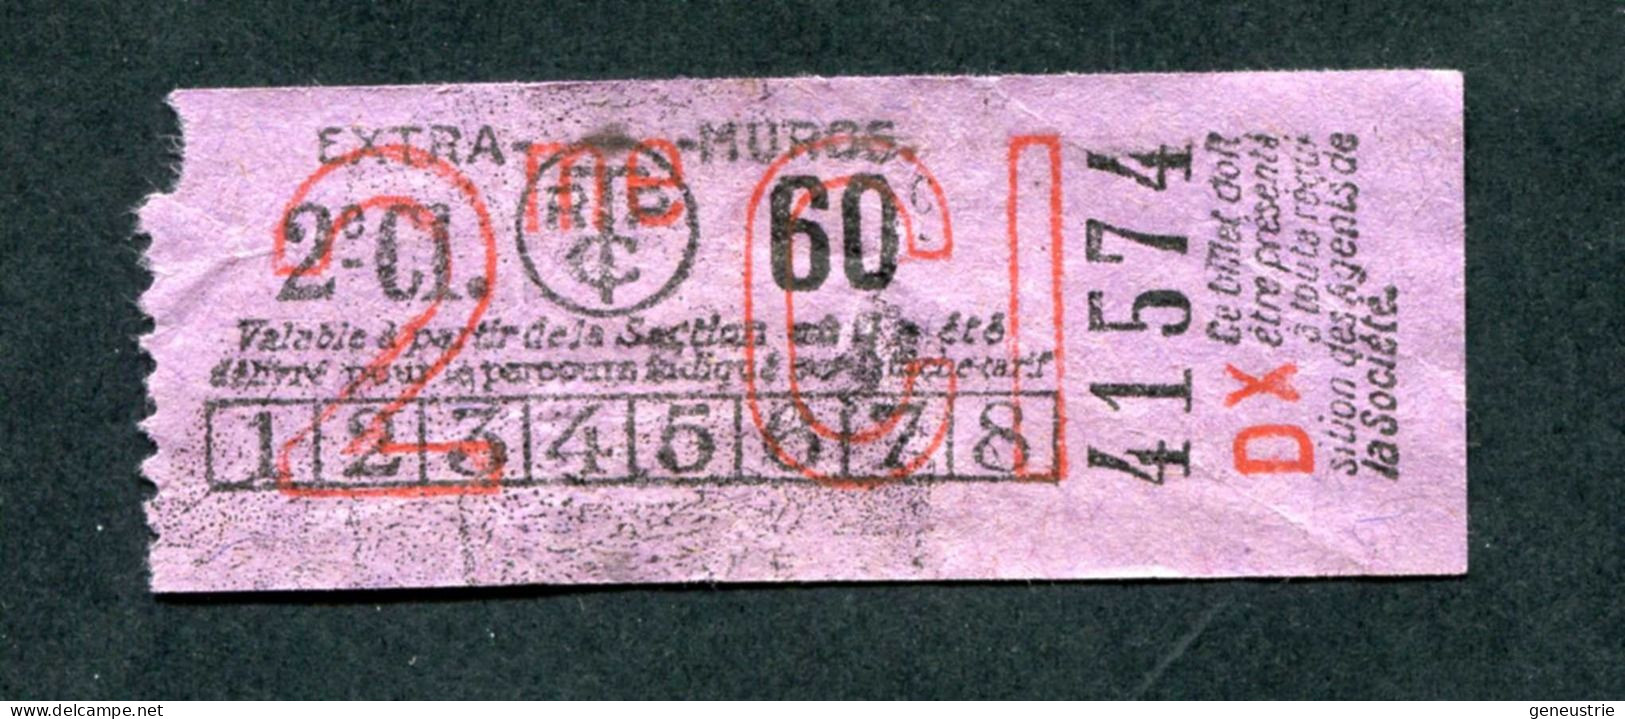 Ticket De Tramways Parisiens 1921 à 1938 (STCRP) Extra-muros 2e Classe 60c - Paris" Tramway - Tram - Europa